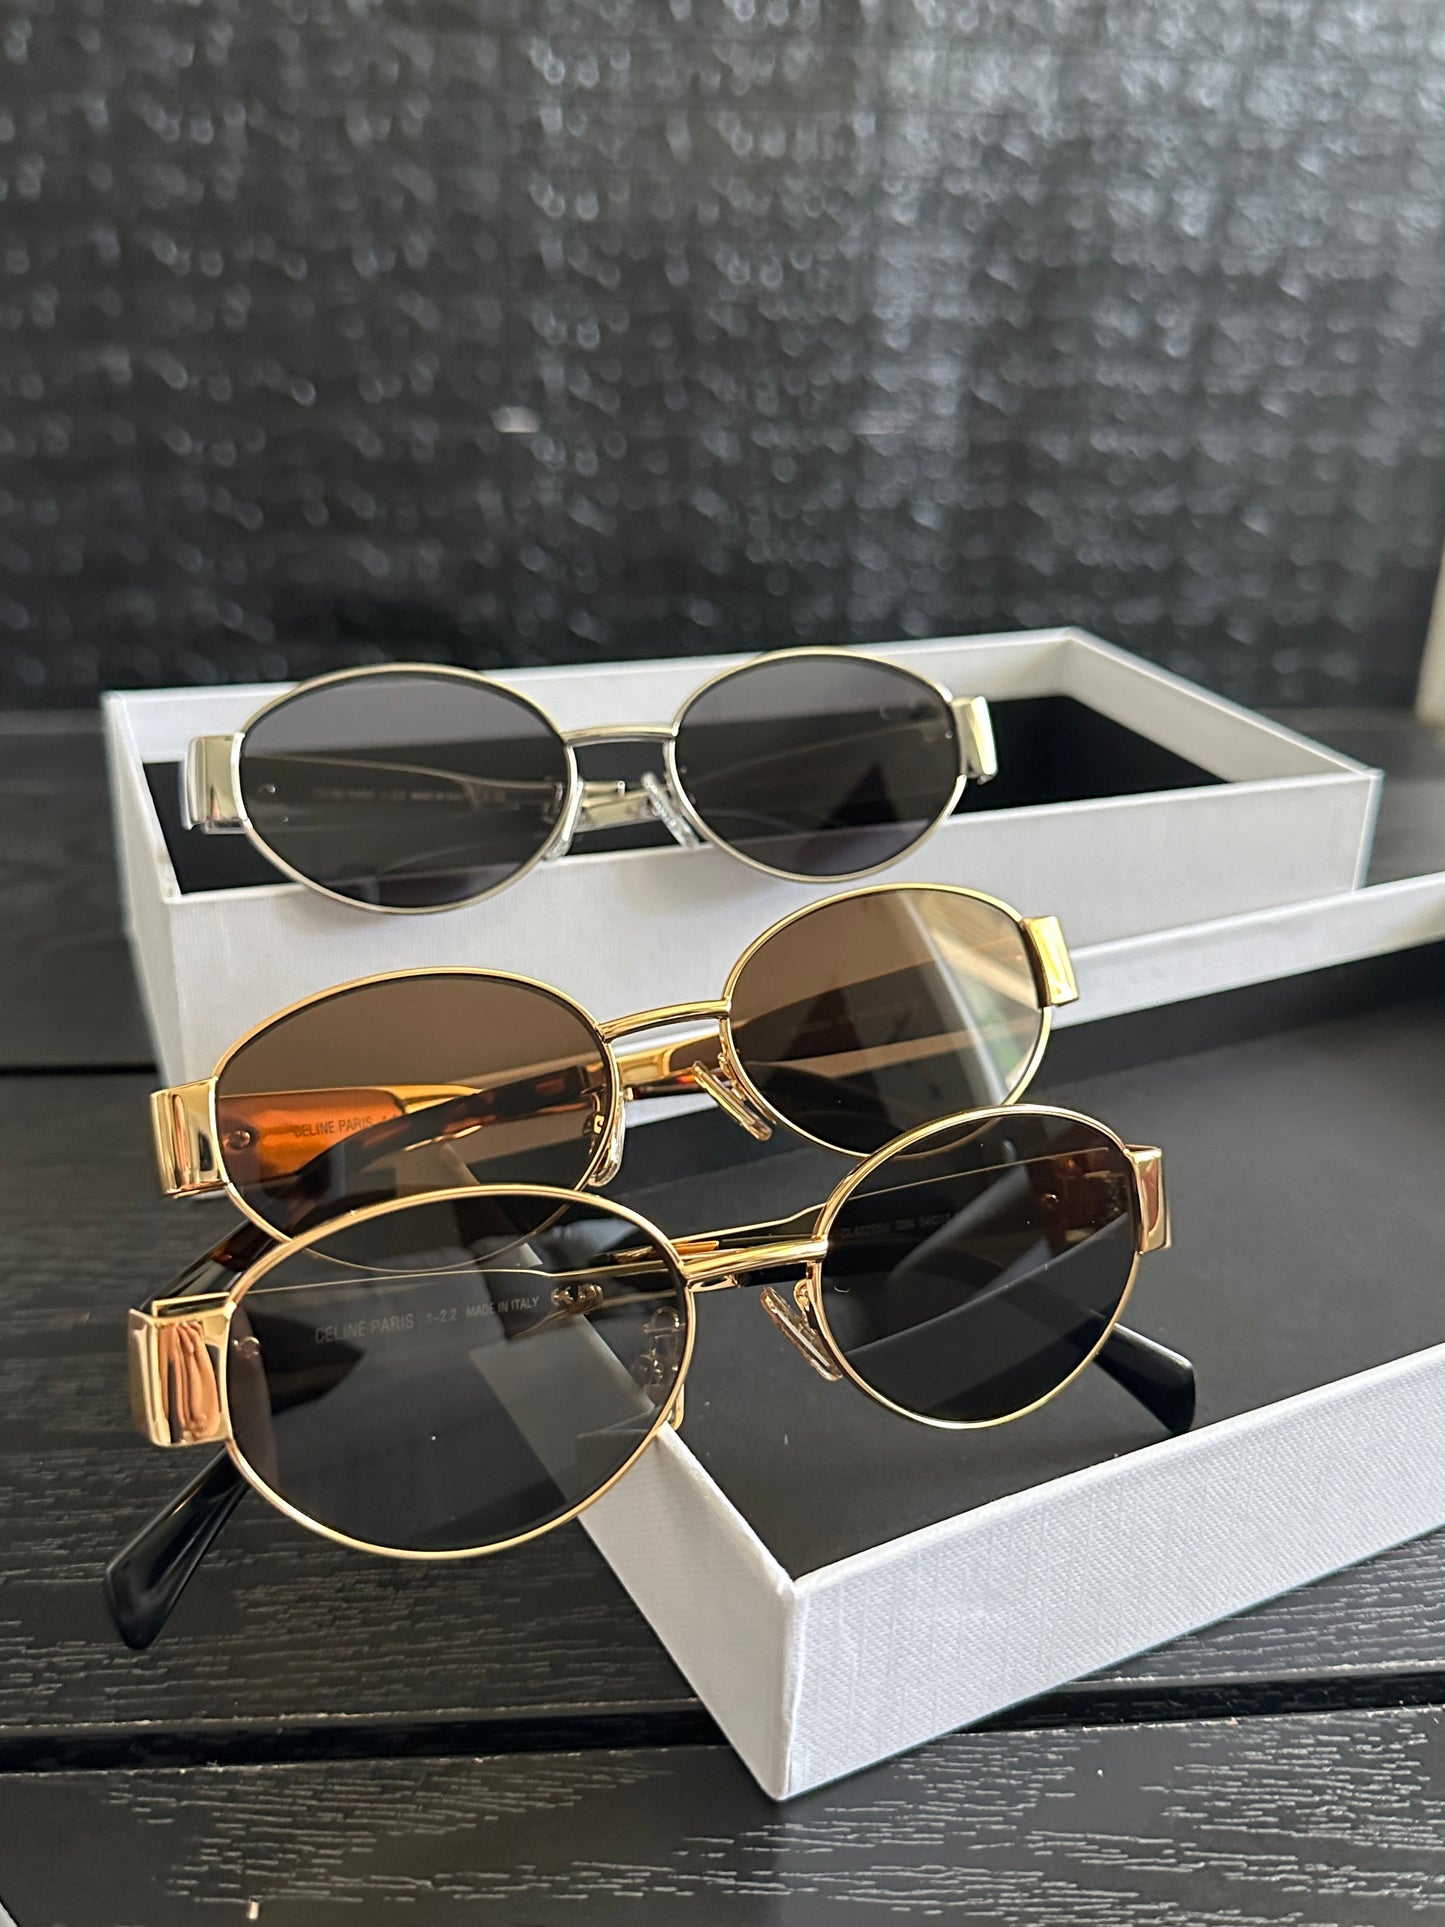 Celeni sunglasses